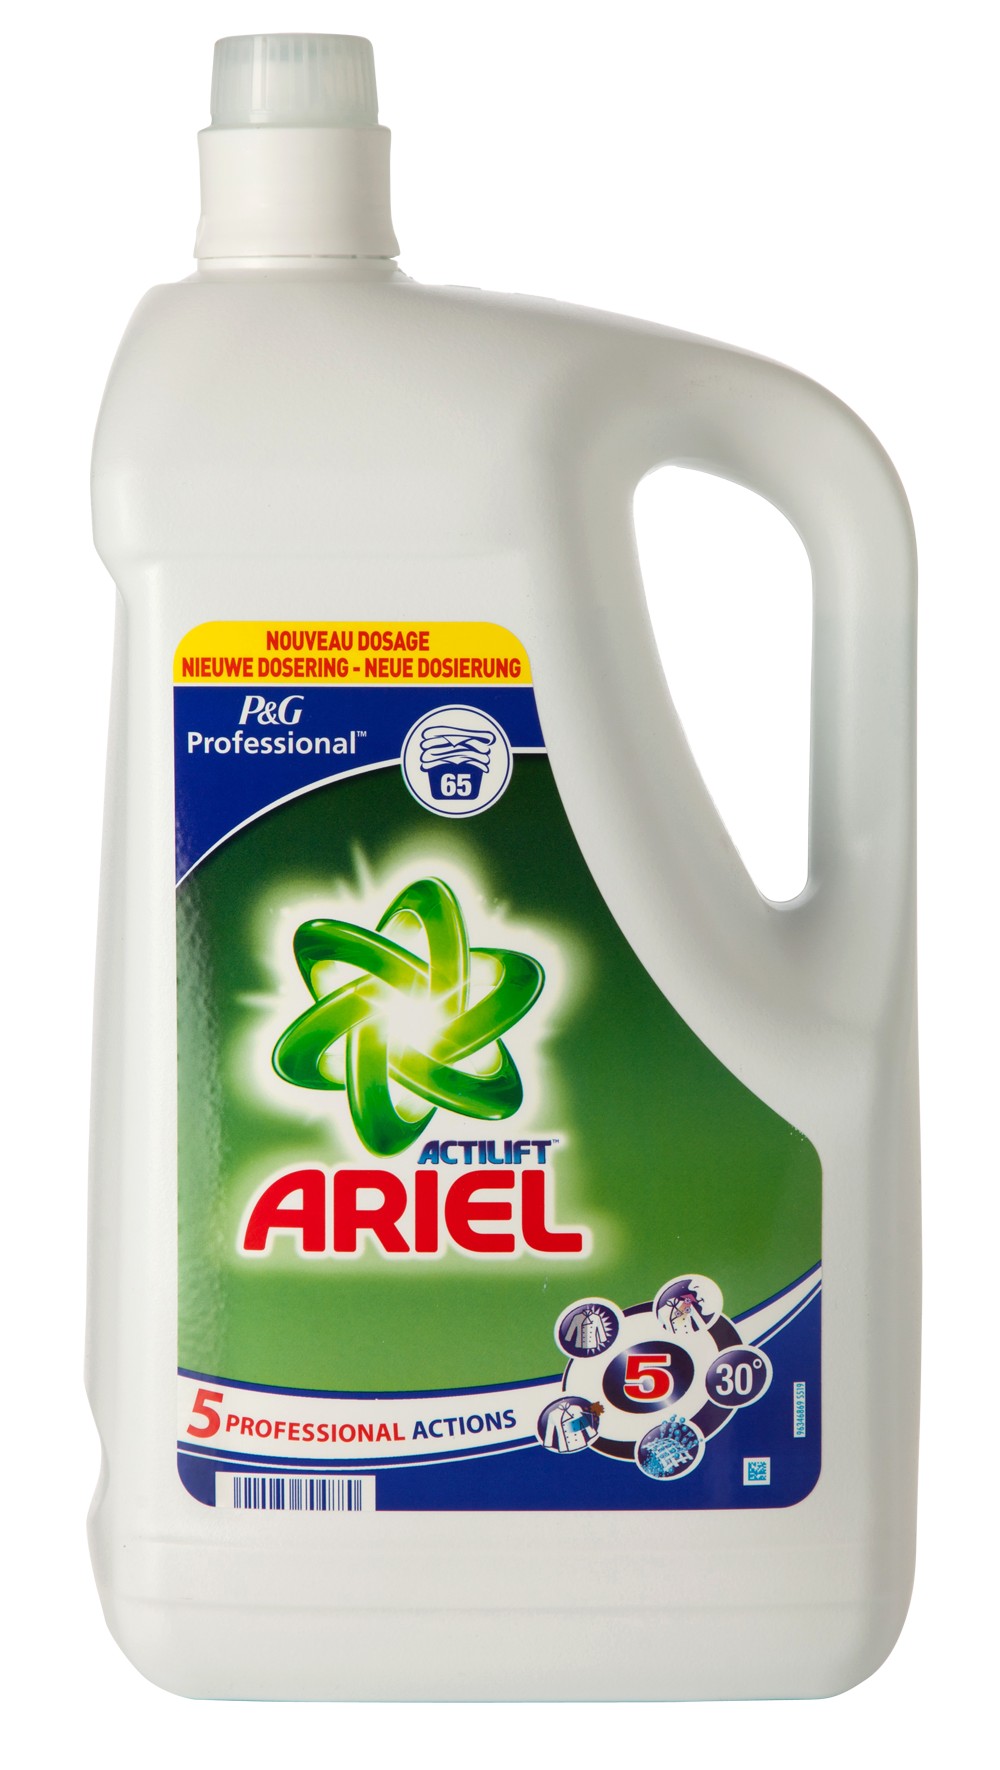 Ariel pro regular vloeibaar wasmiddel 4l